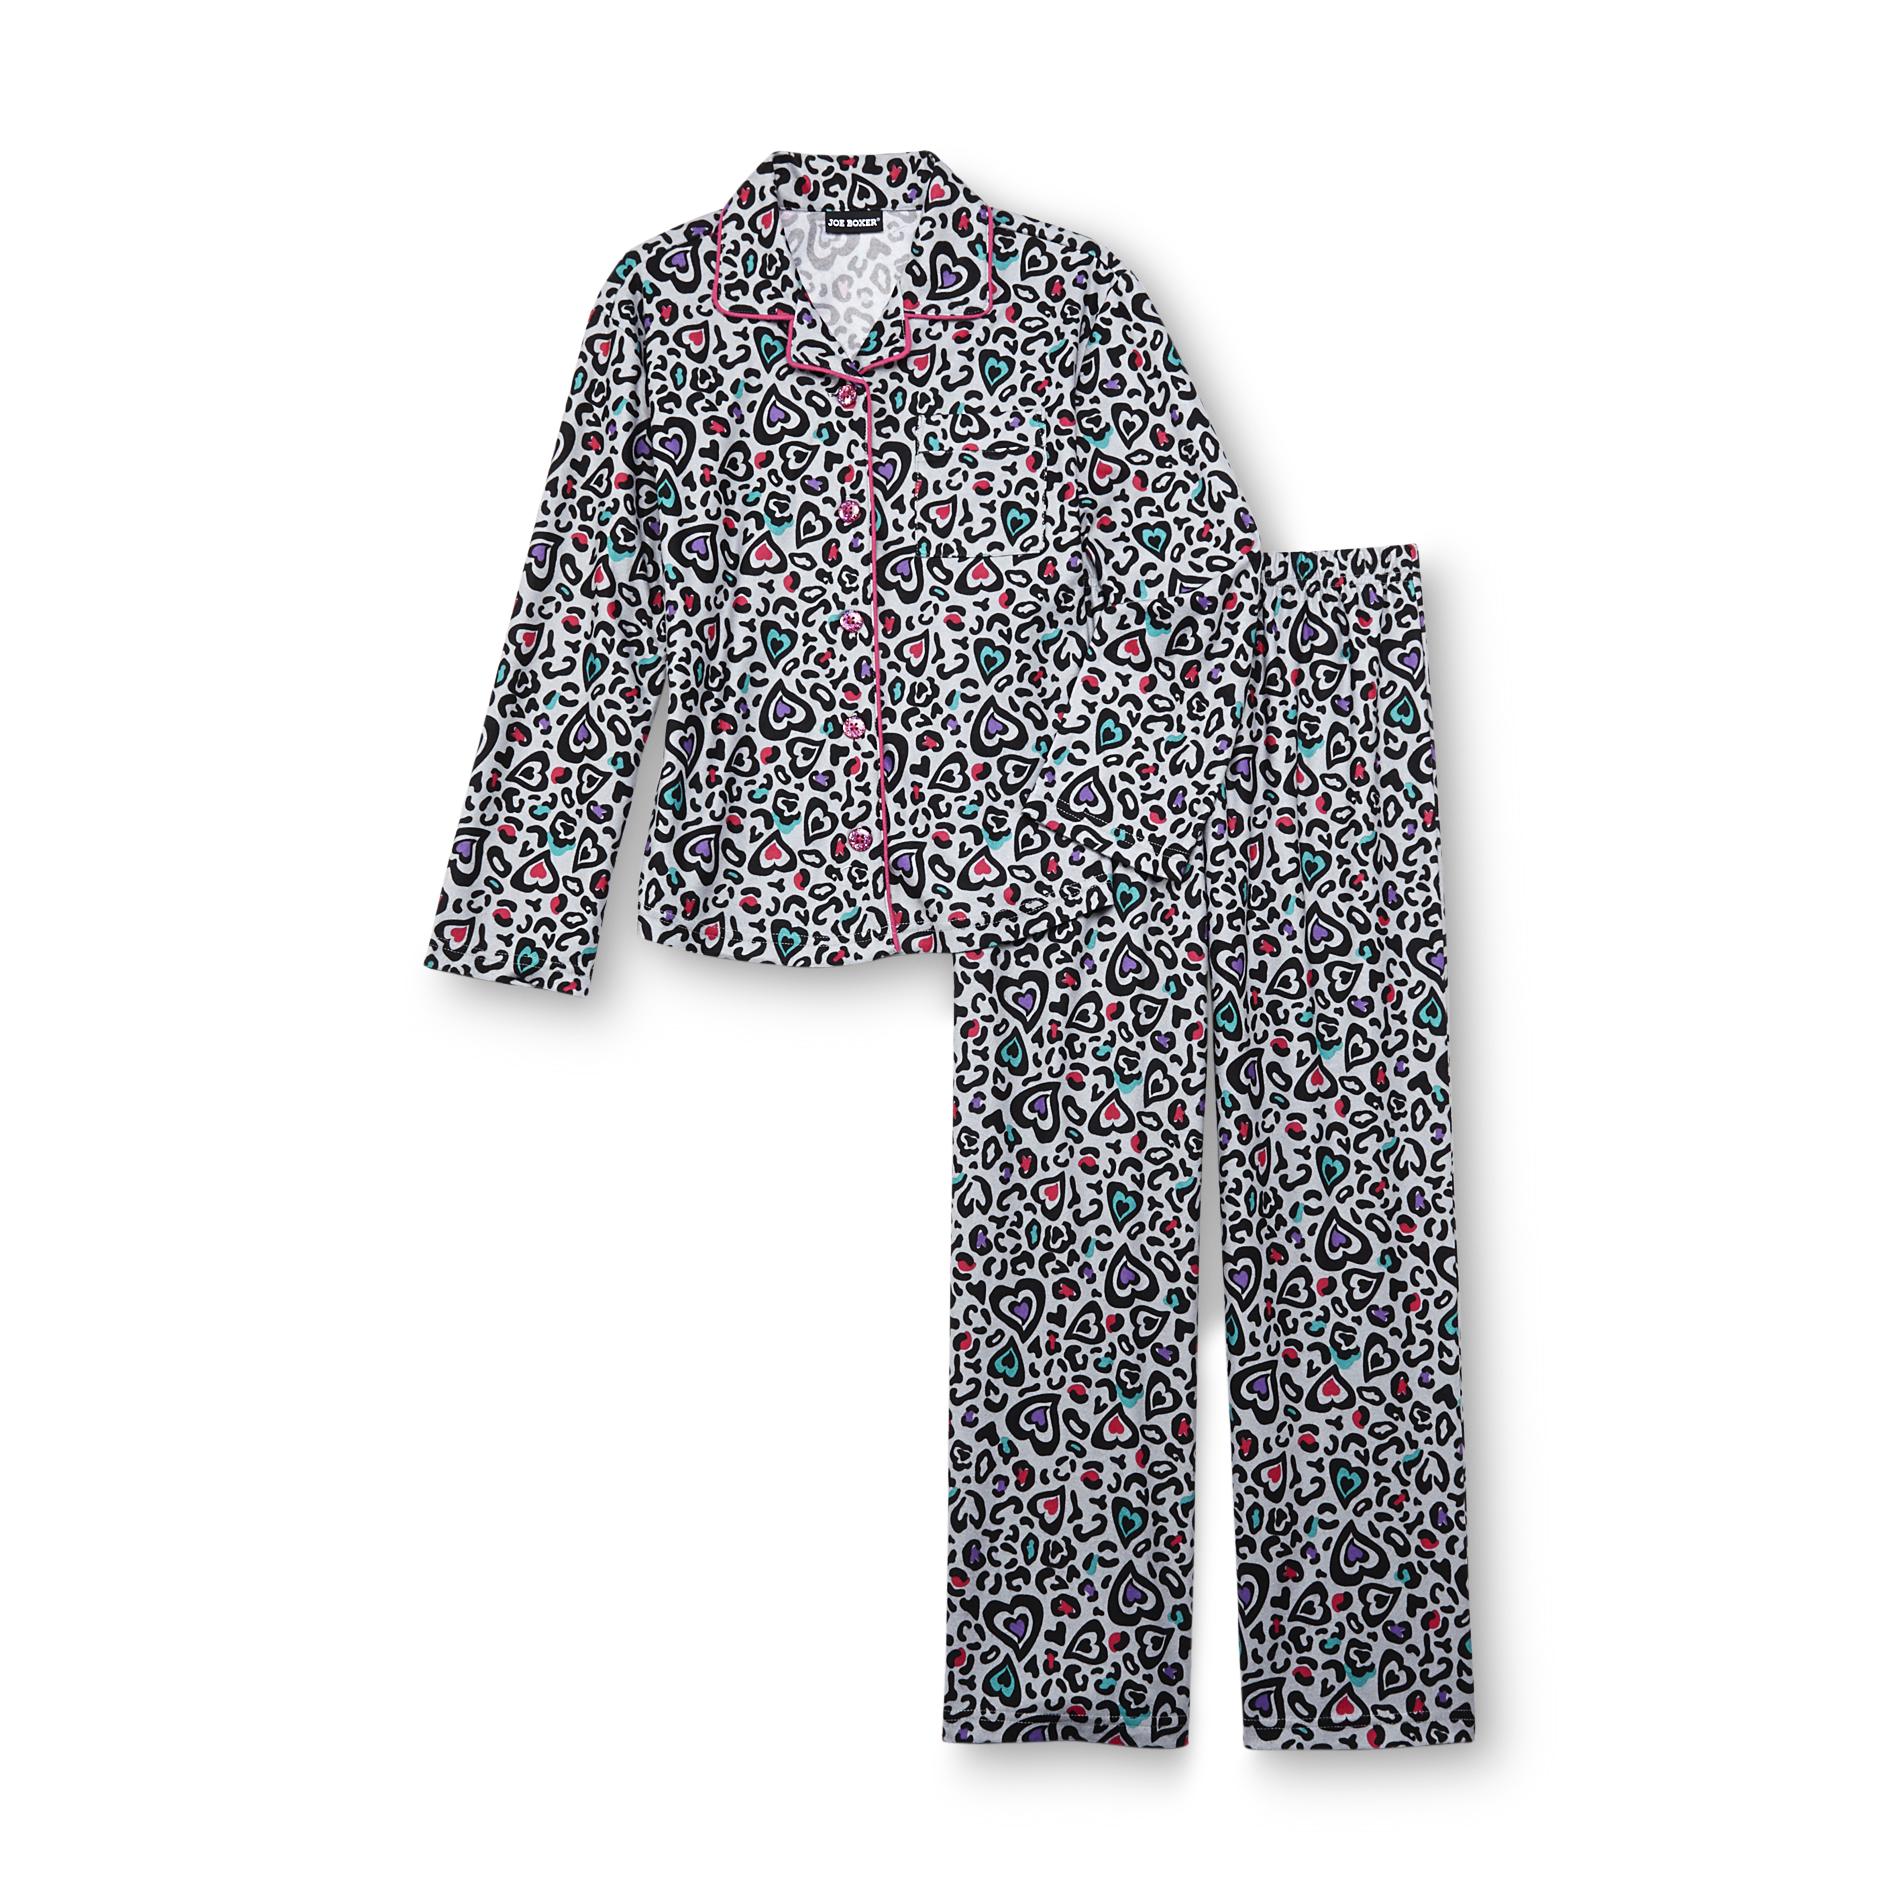 Joe Boxer Girl's Flannel Pajamas - Leopard Print & Hearts